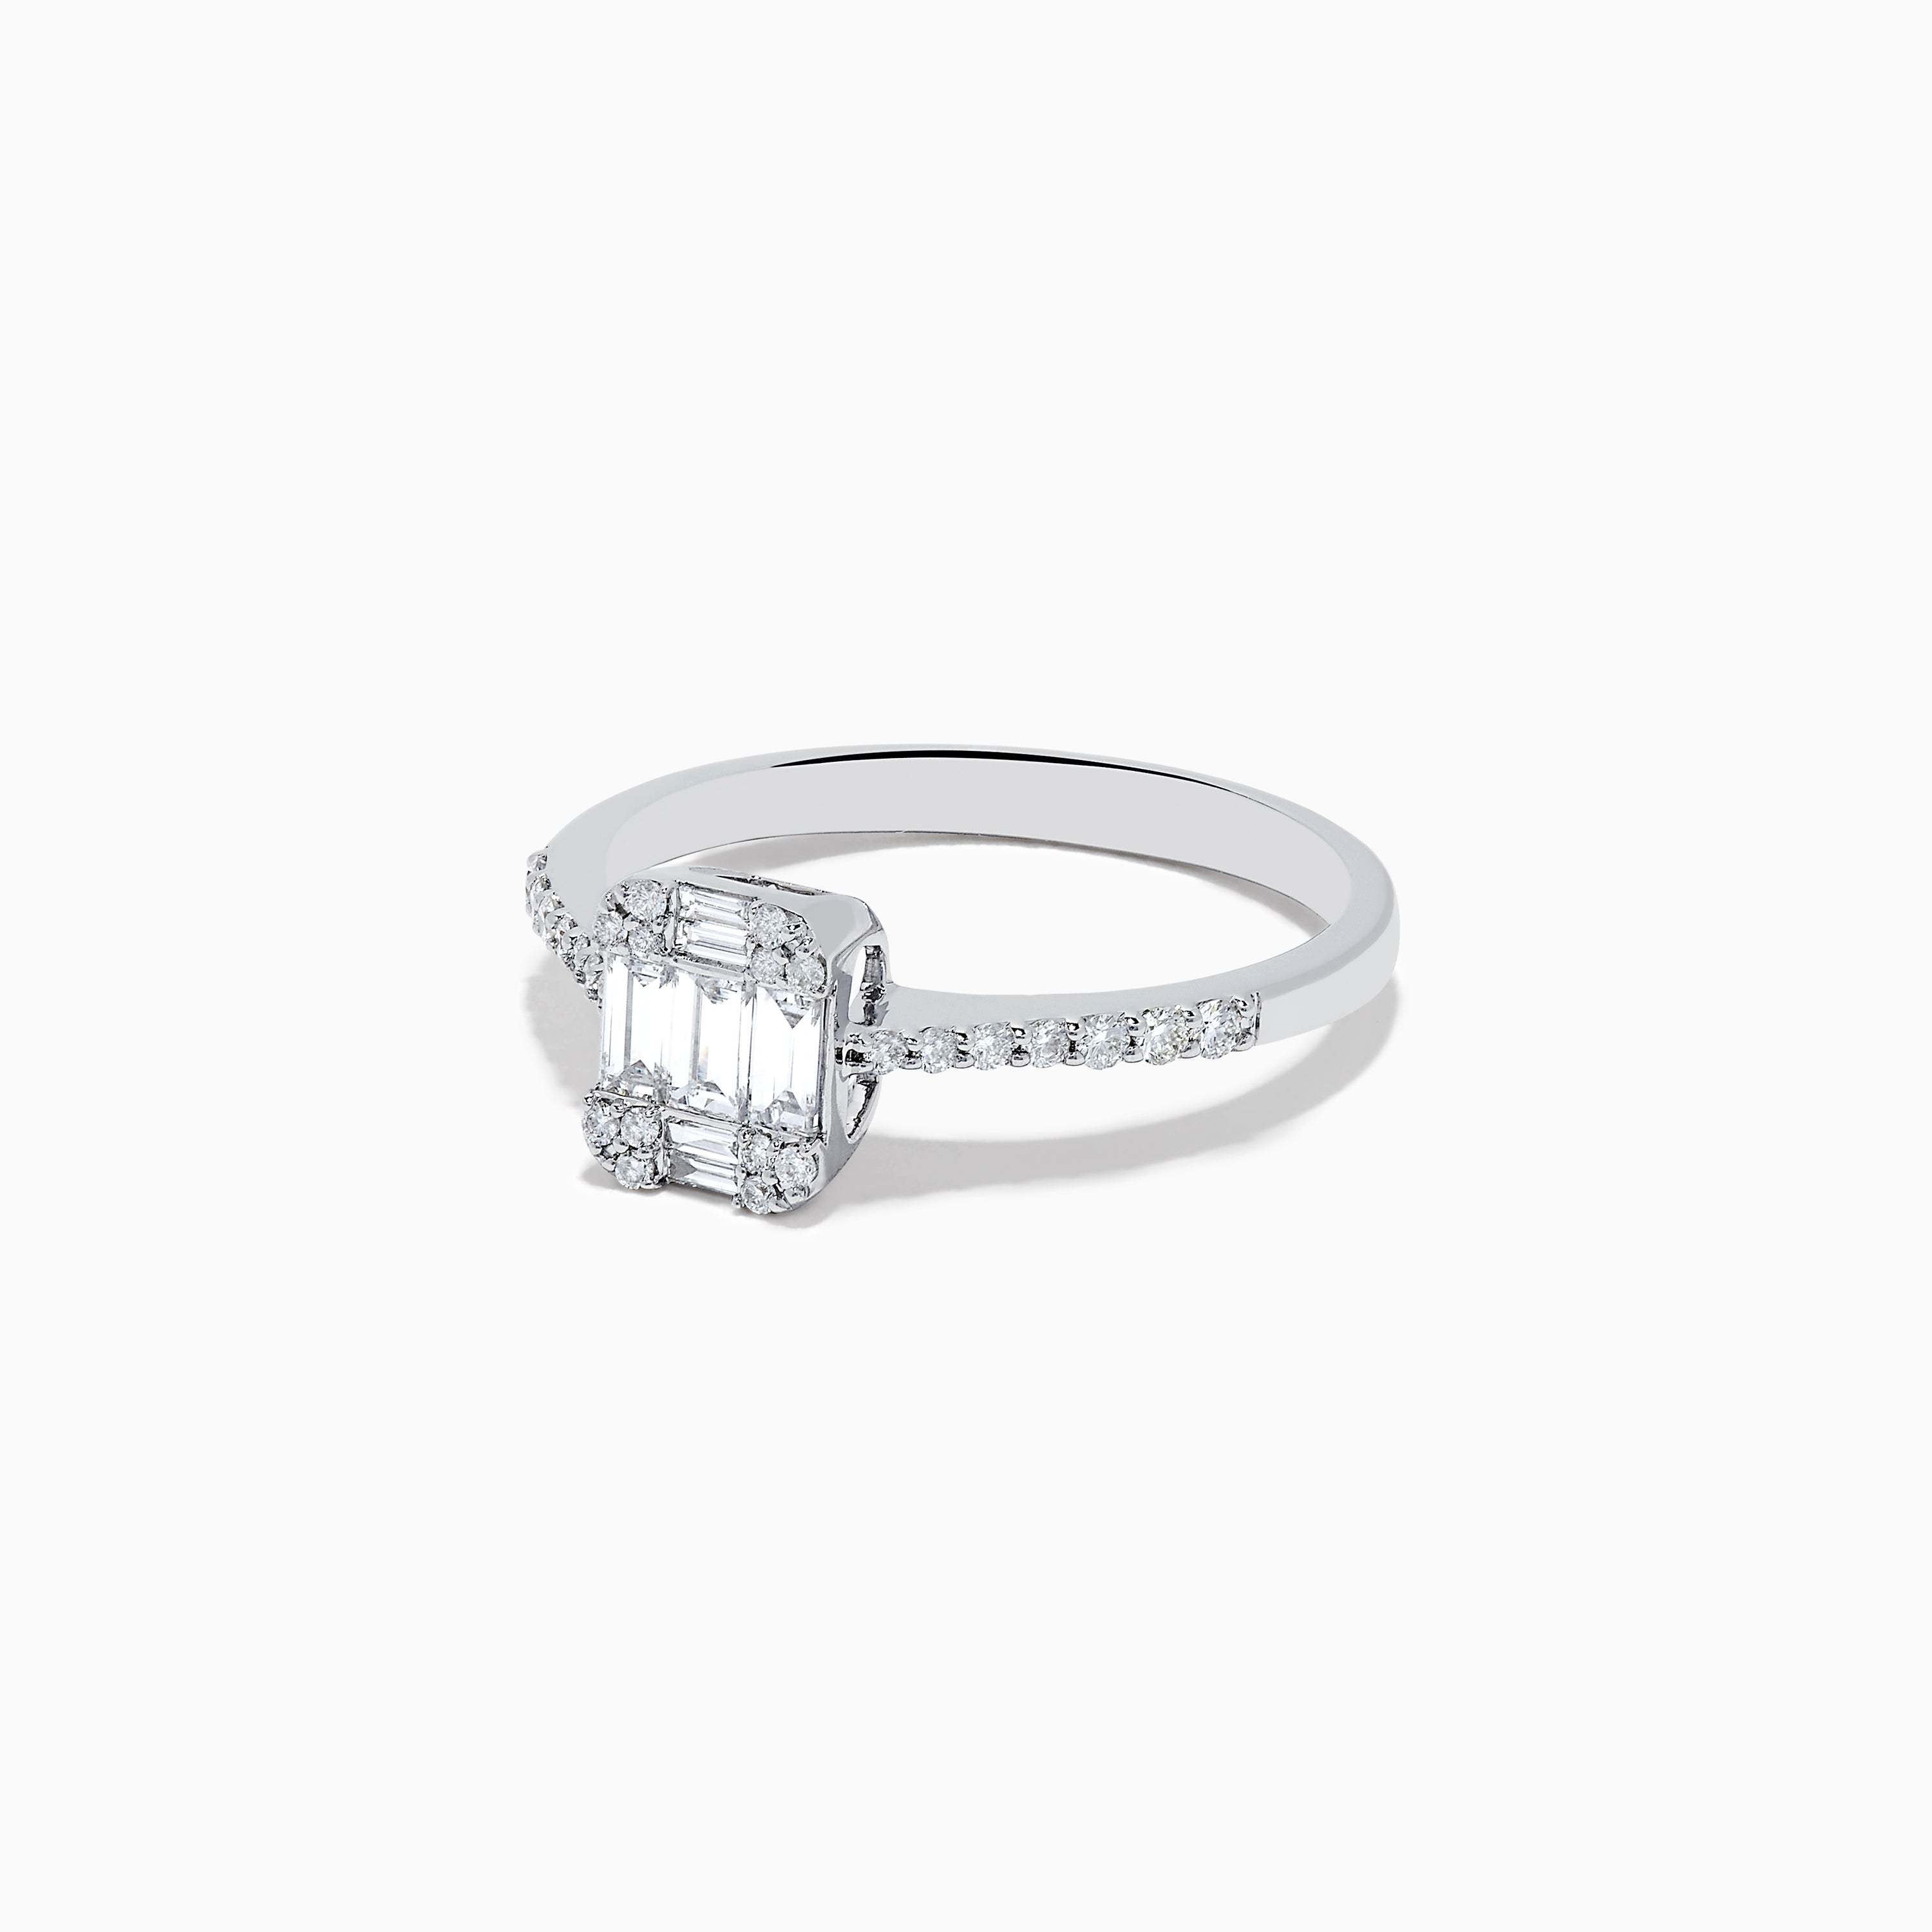 Effy Classique 14K White Gold Diamond Necklace